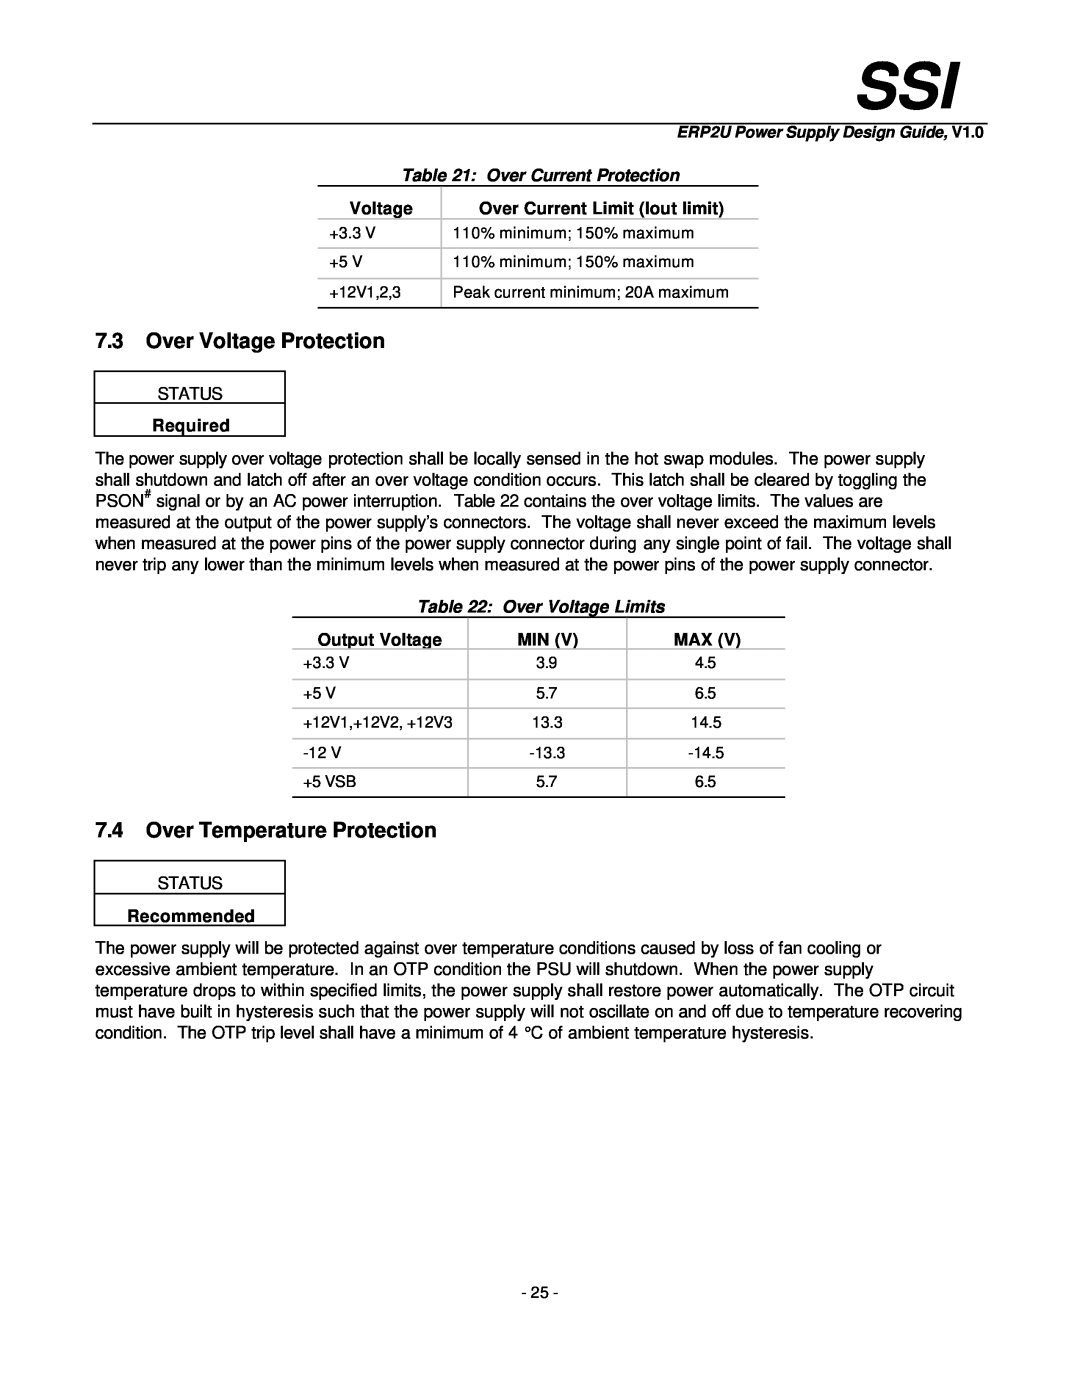 Intel ERP2U manual Over Voltage Protection, Over Temperature Protection, Over Current Protection, Over Voltage Limits 